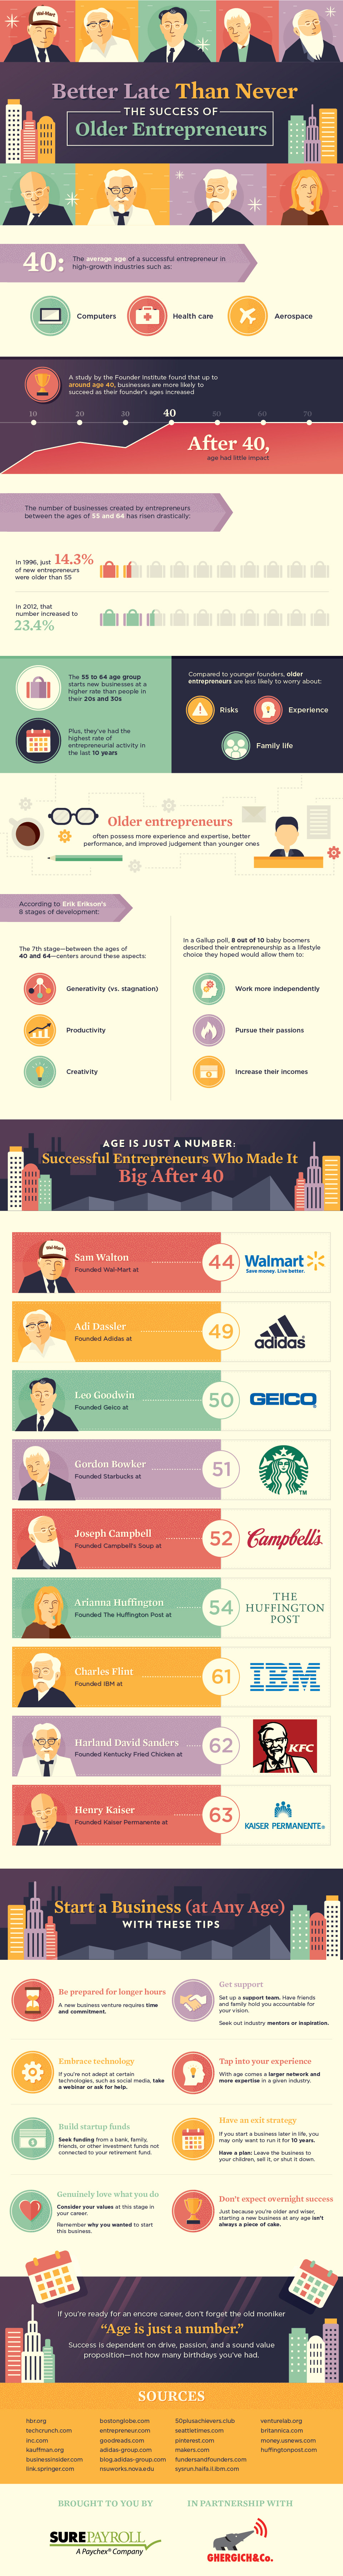 Is Age Just a Number? Big Wins by Older Entrepreneurs